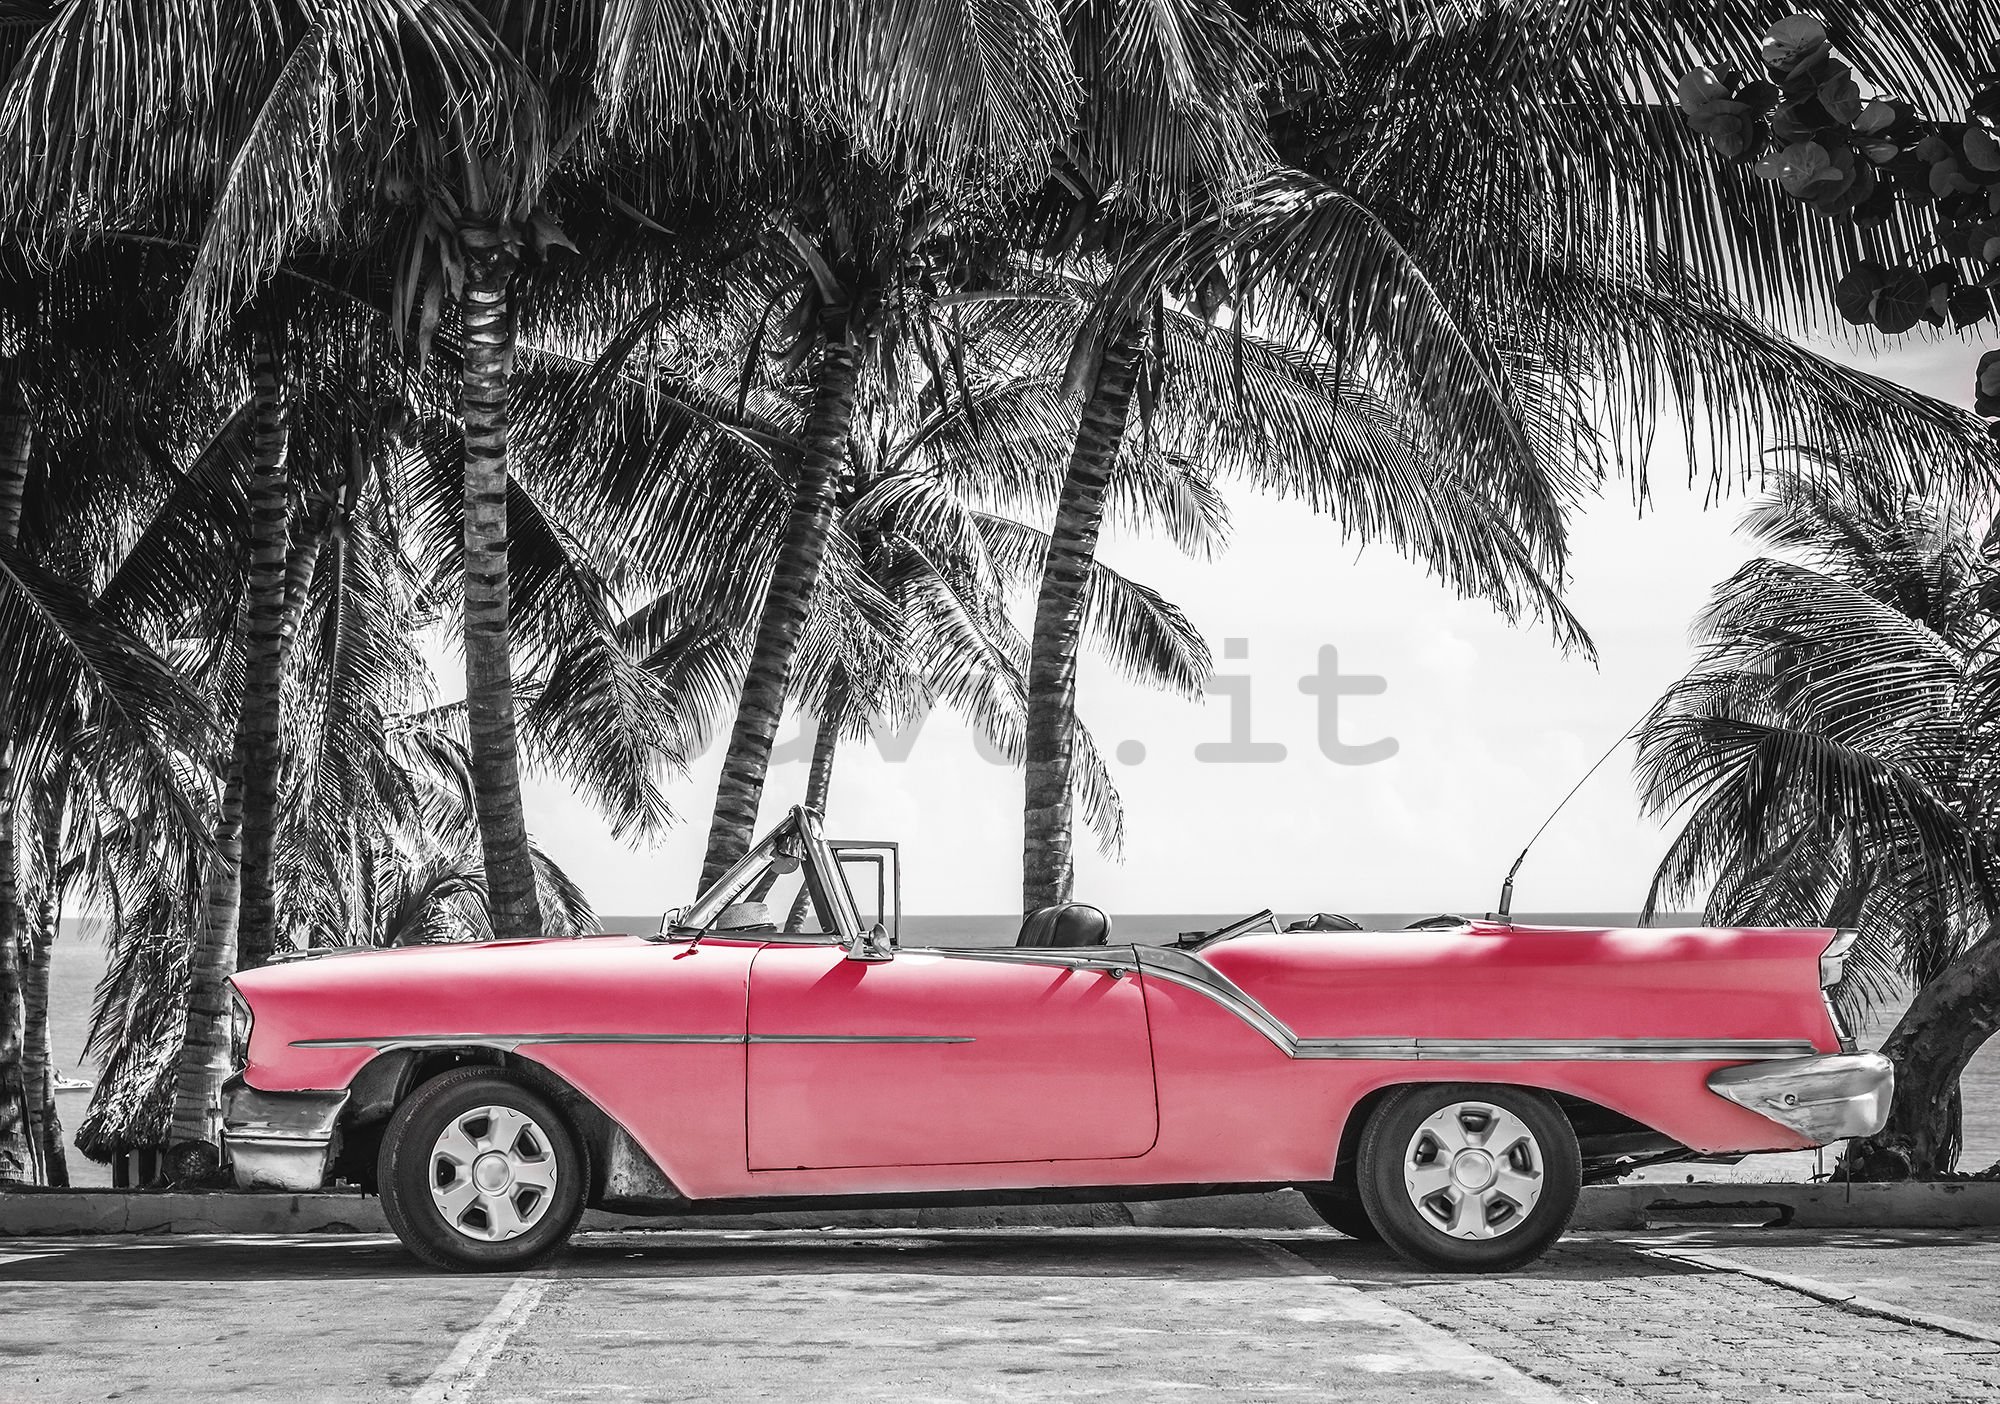 Fotomurale in TNT: Automobile rossa di Cuba - 254x368 cm